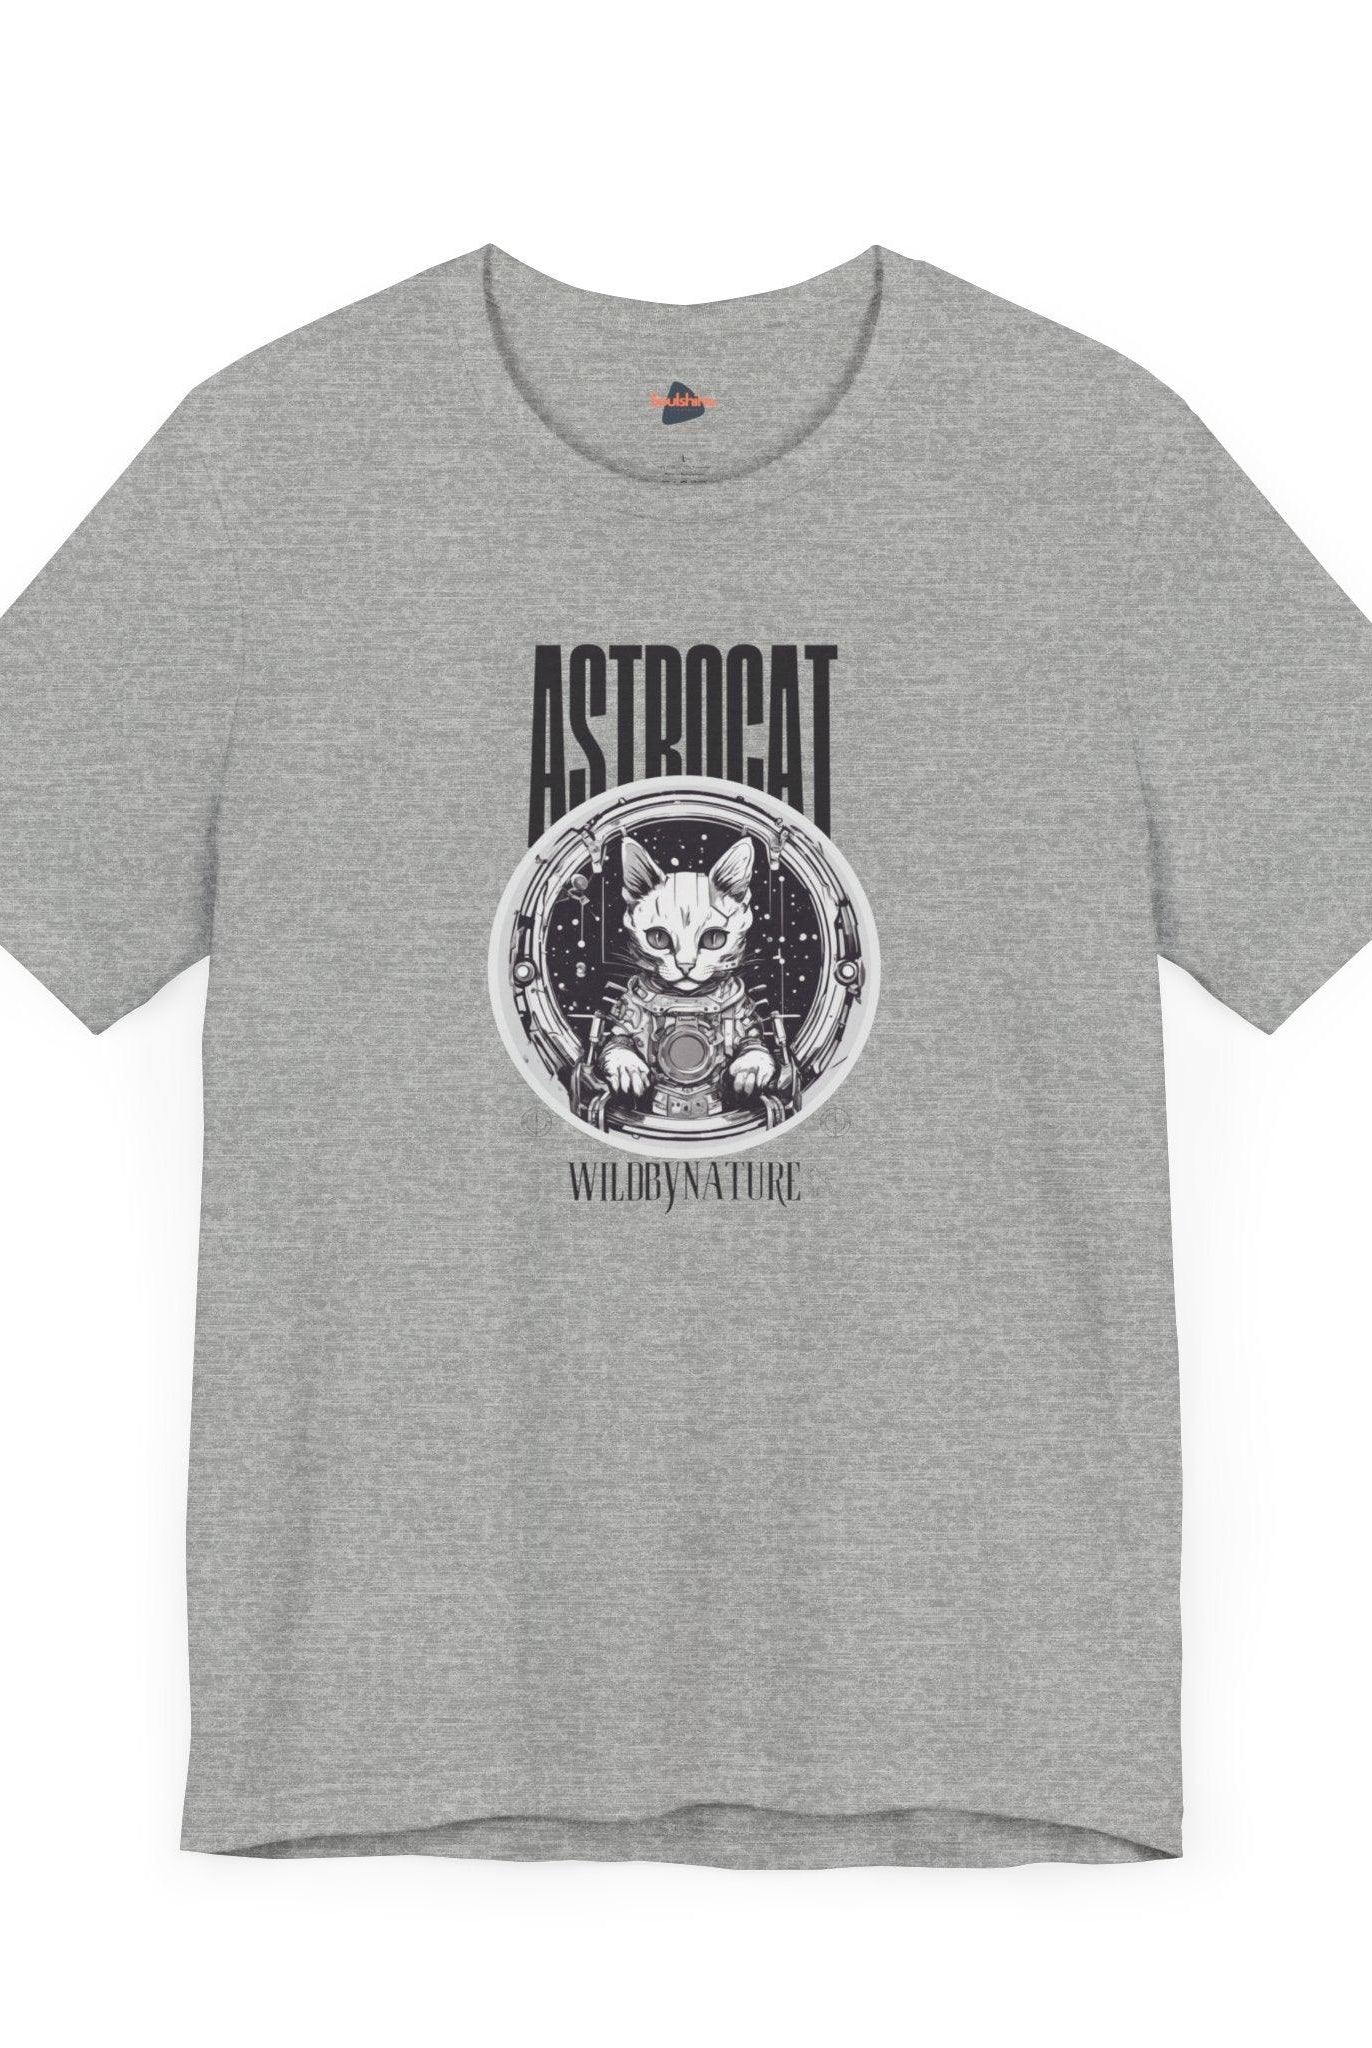 Astrocat - Astronaut - Soulshinecreators - Unisex Jersey Short Sleeve Tee - US - Soulshinecreators